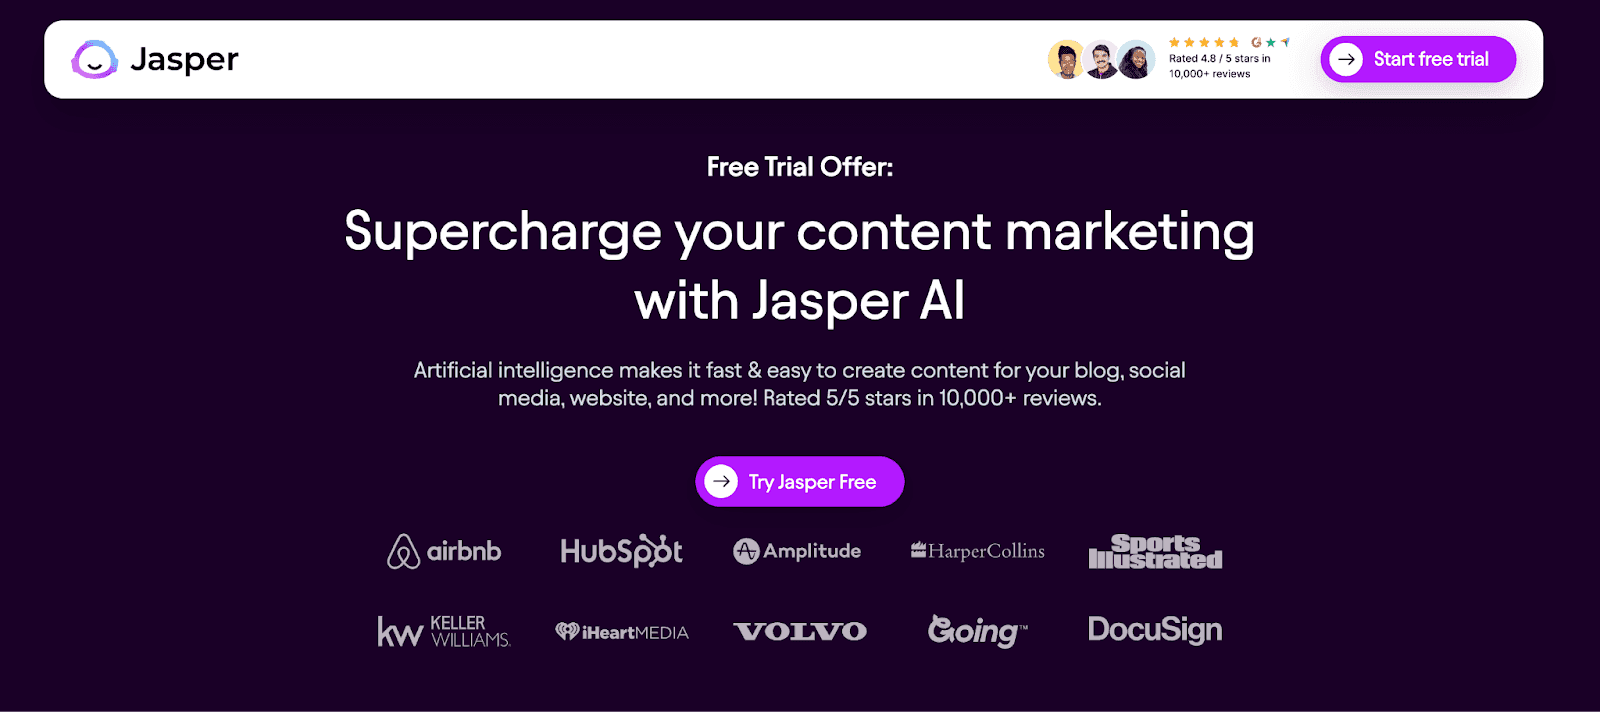 Jasper AI website - Supercharge your content marketing with Jasper AI